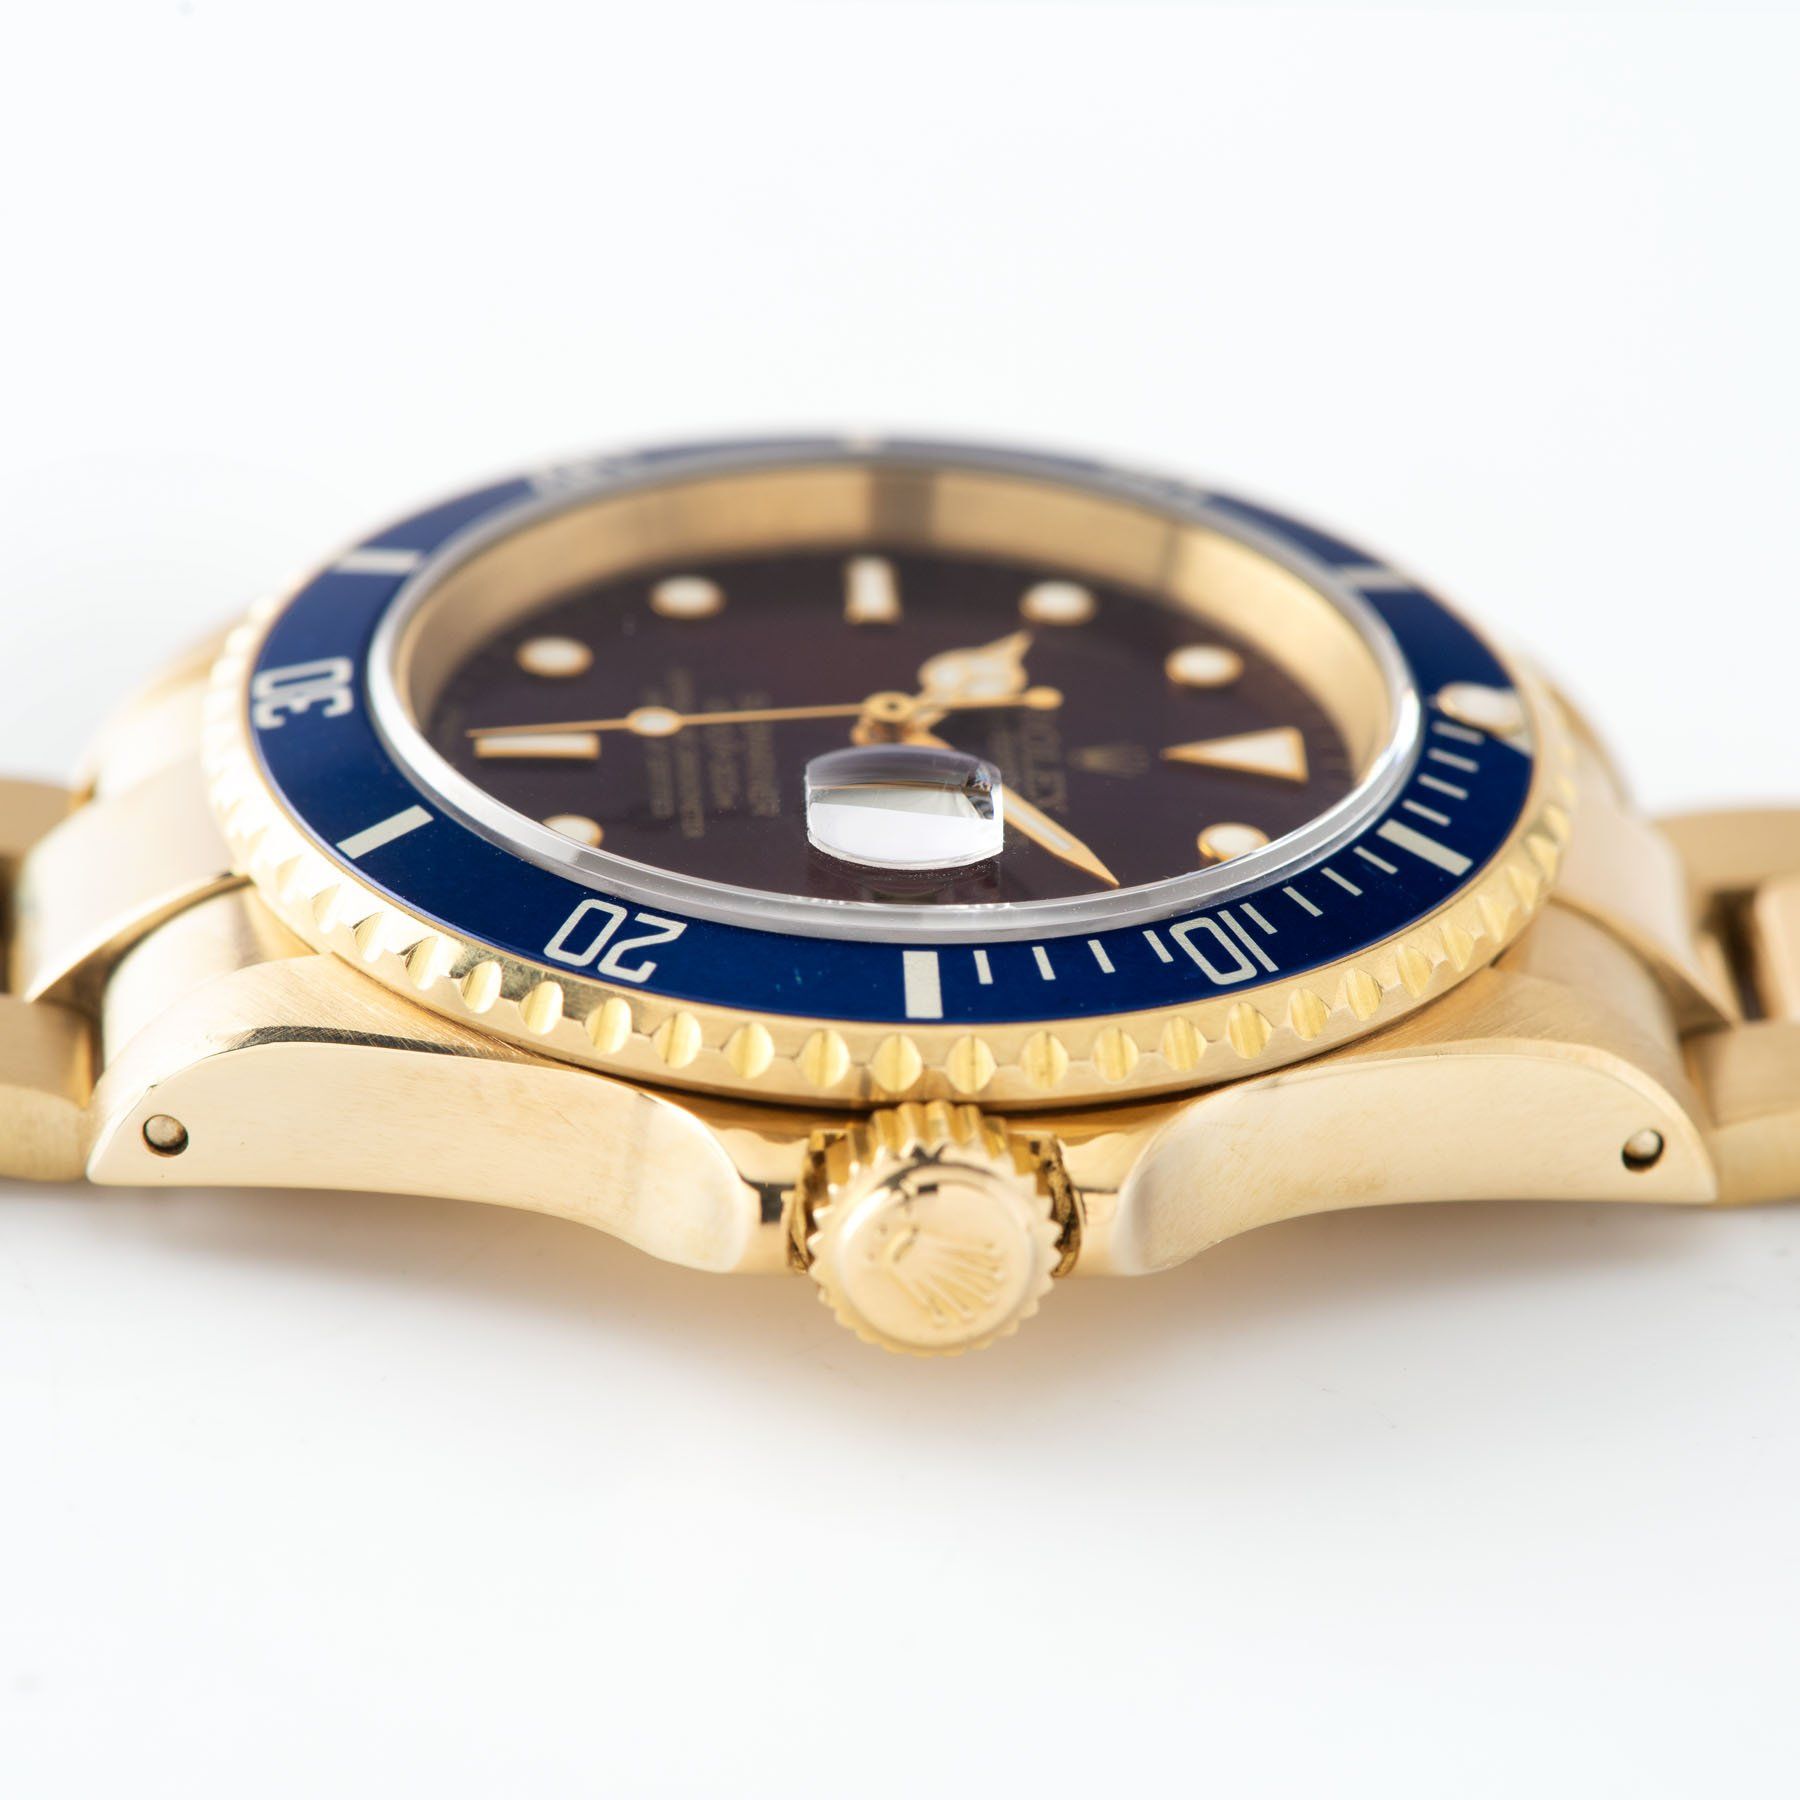 Rolex Submariner Date Purple Dial Yellow Gold 16618 case details